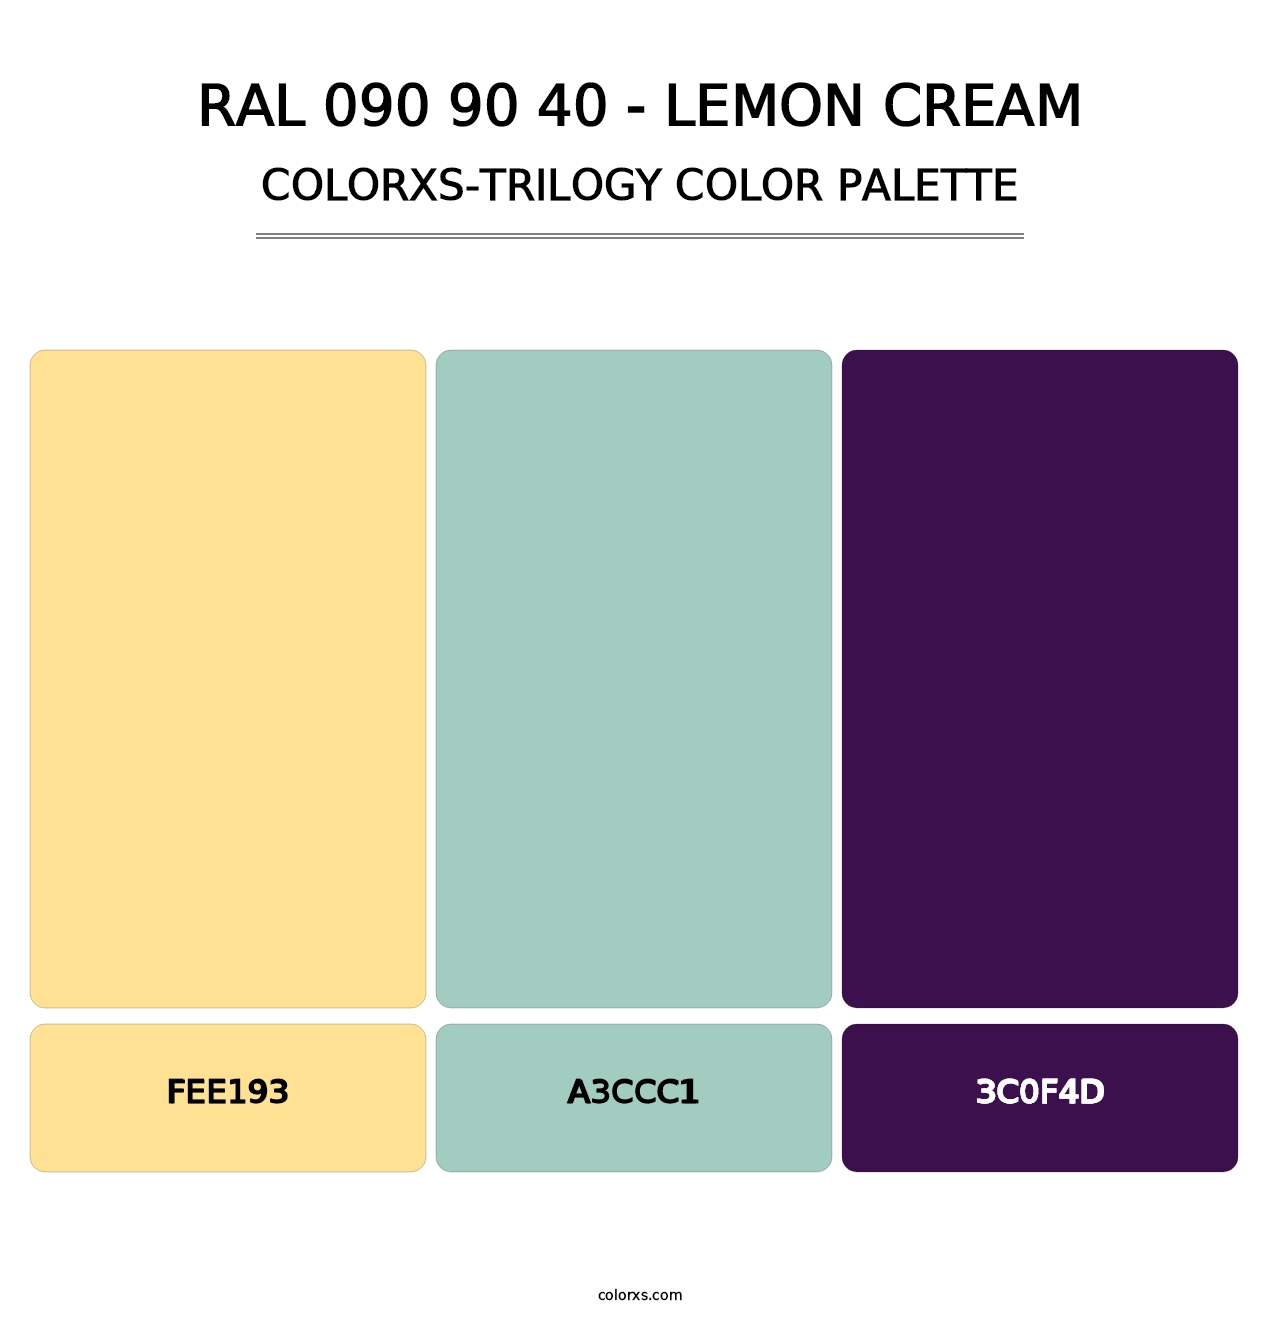 RAL 090 90 40 - Lemon Cream - Colorxs Trilogy Palette